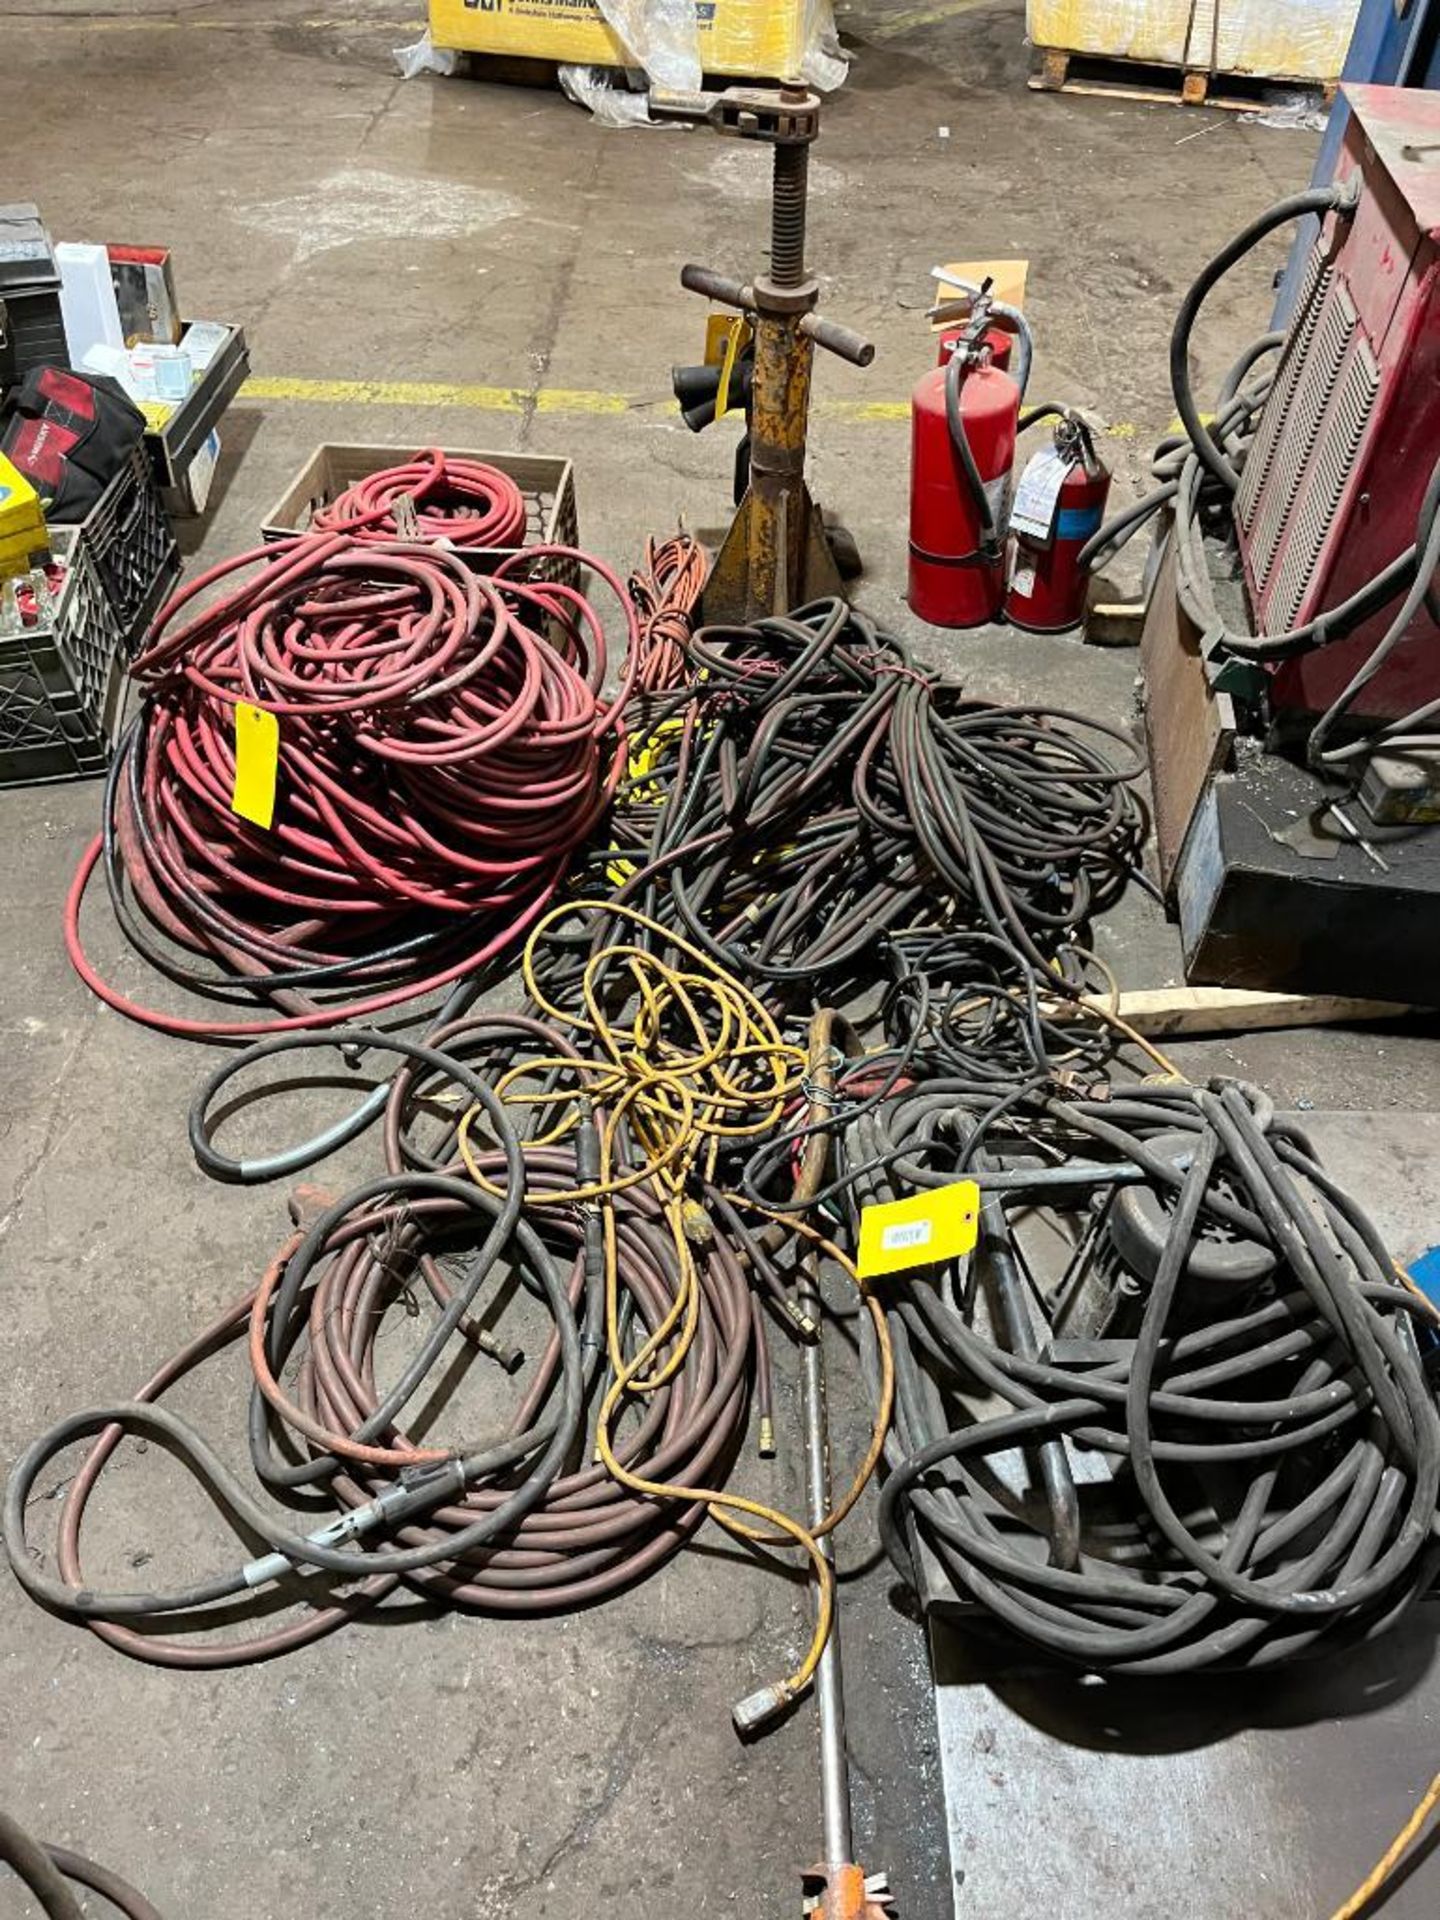 assorted air hose, acetylene hose, & extension cords